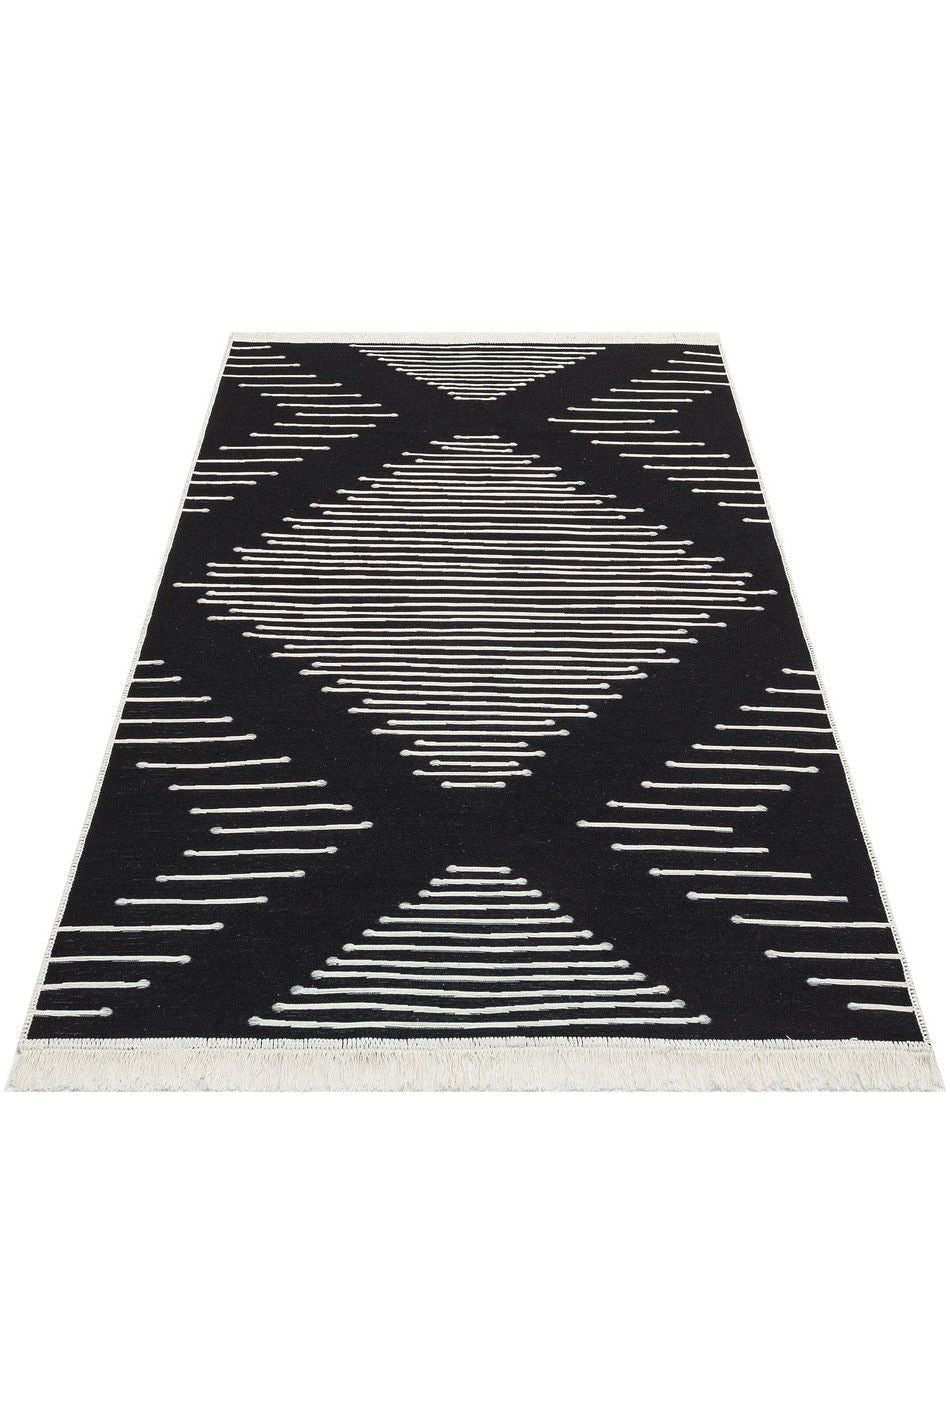 #Turkish_Carpets_Rugs# #Modern_Carpets# #Abrash_Carpets#Ar 15 Black